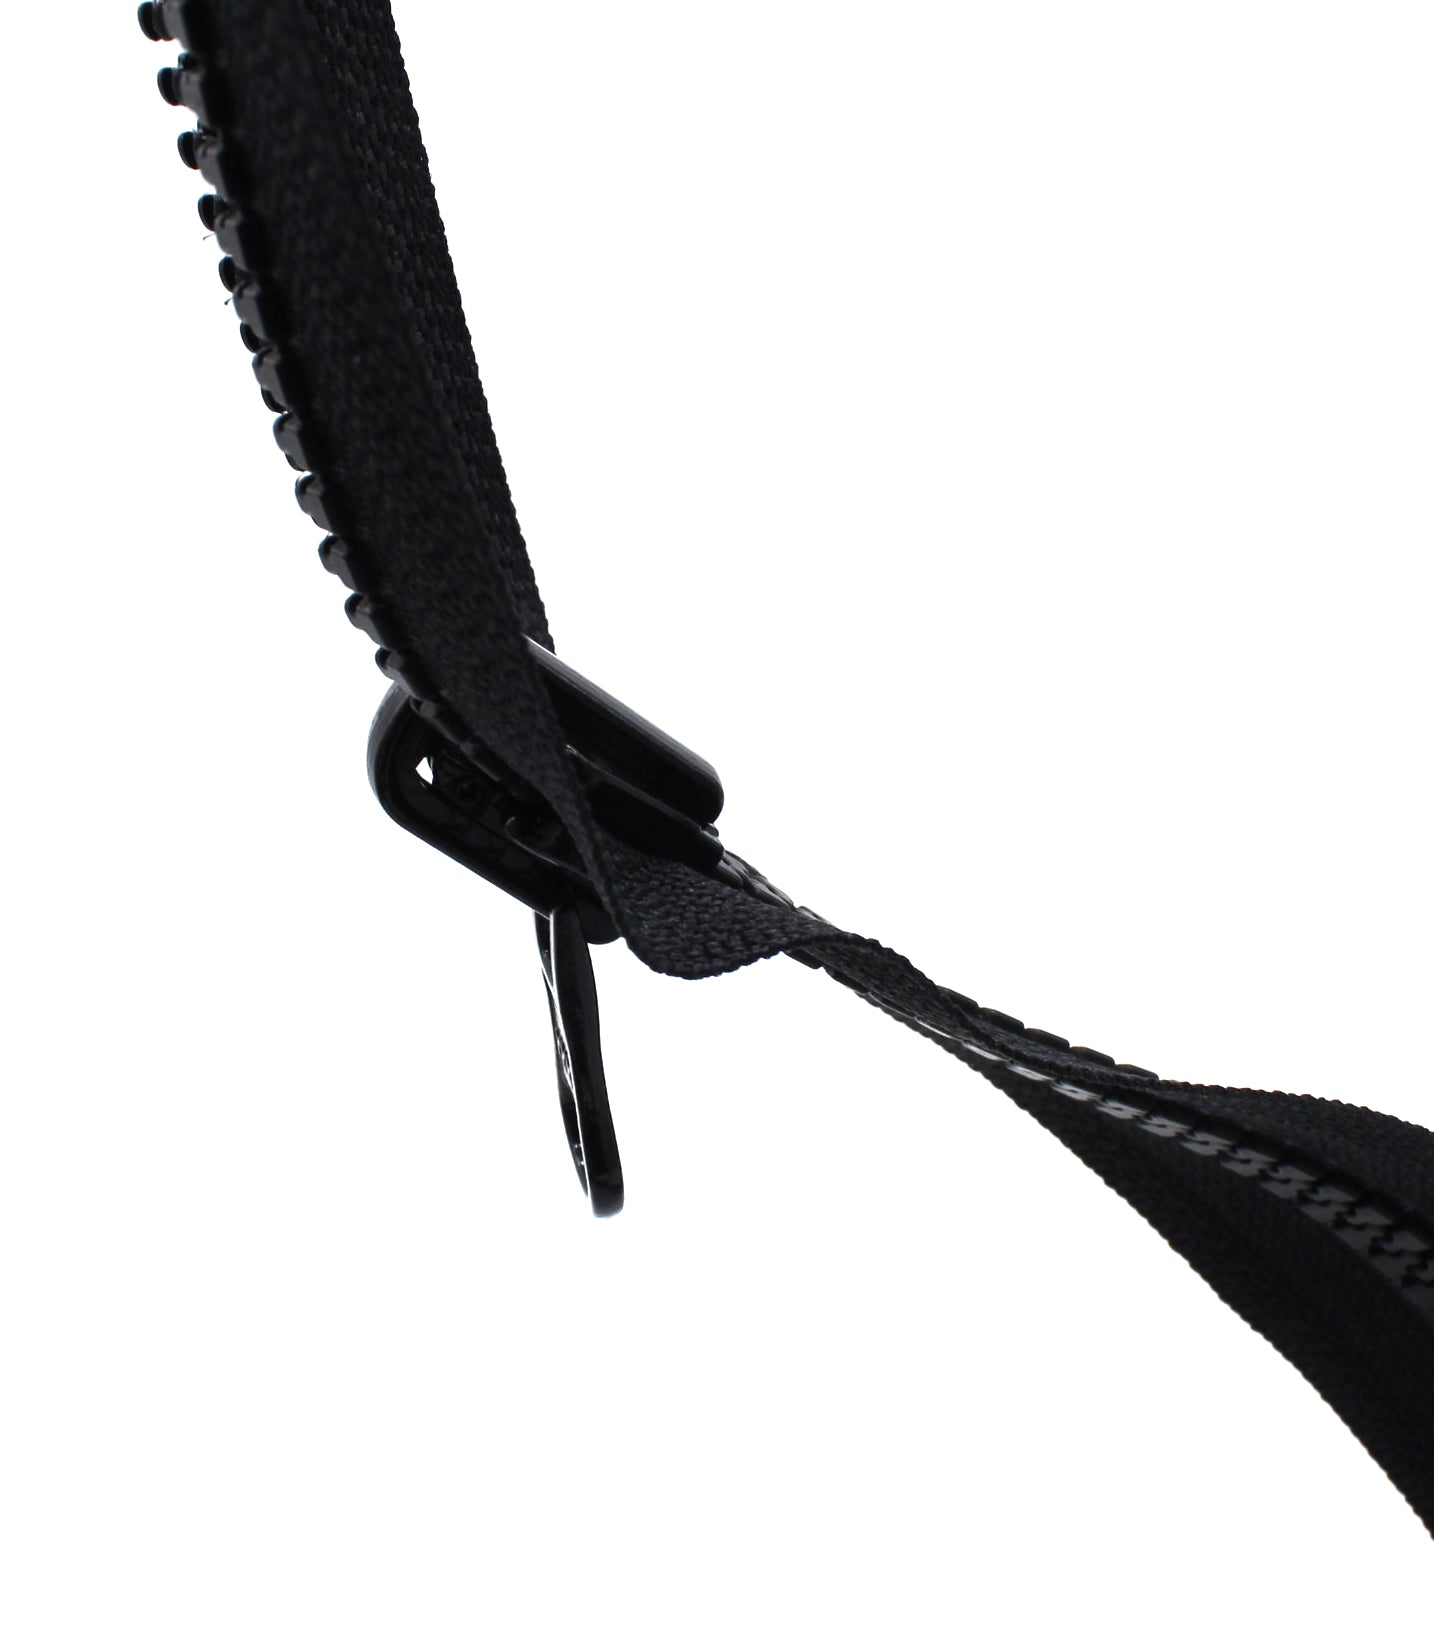 Black) Reversible Nylon Jacket Zippers 18